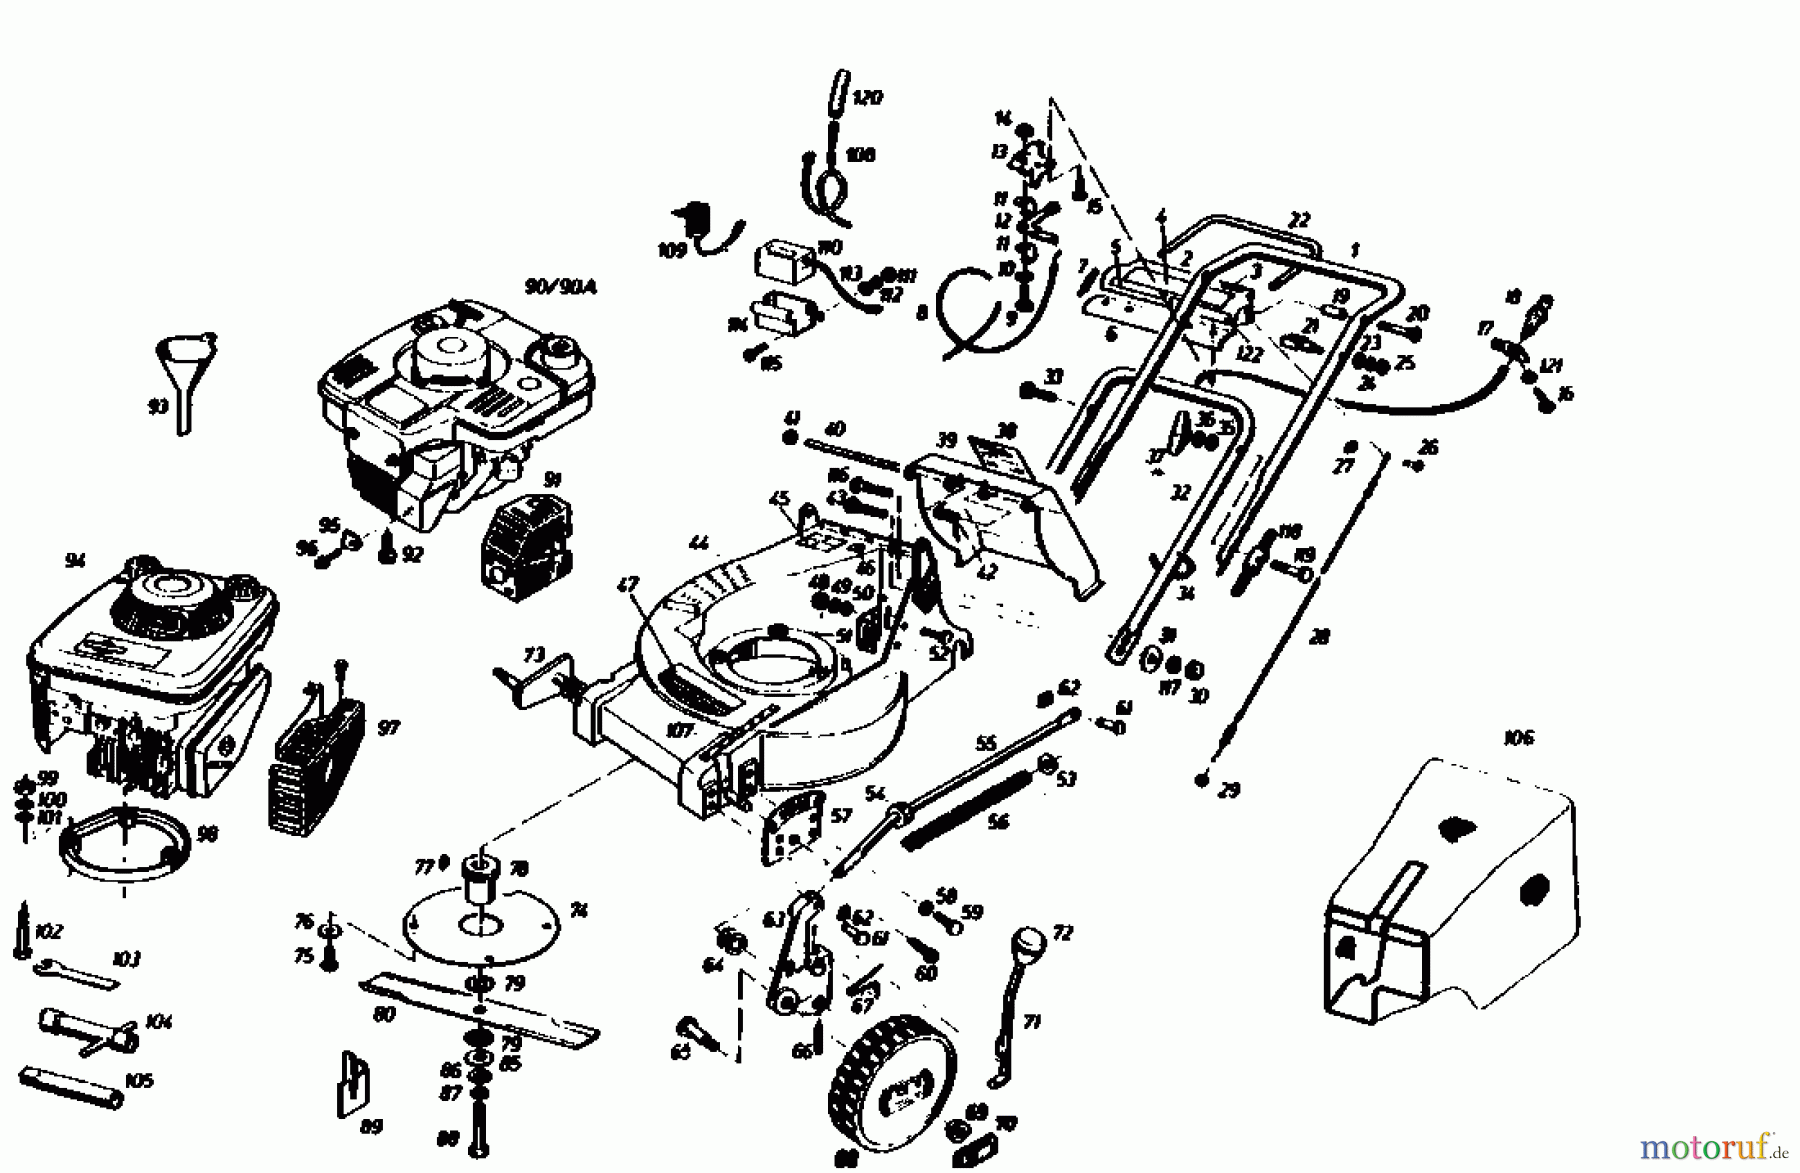  Gutbrod Petrol mower self propelled HB 55 R 02882.04  (1986) Basic machine